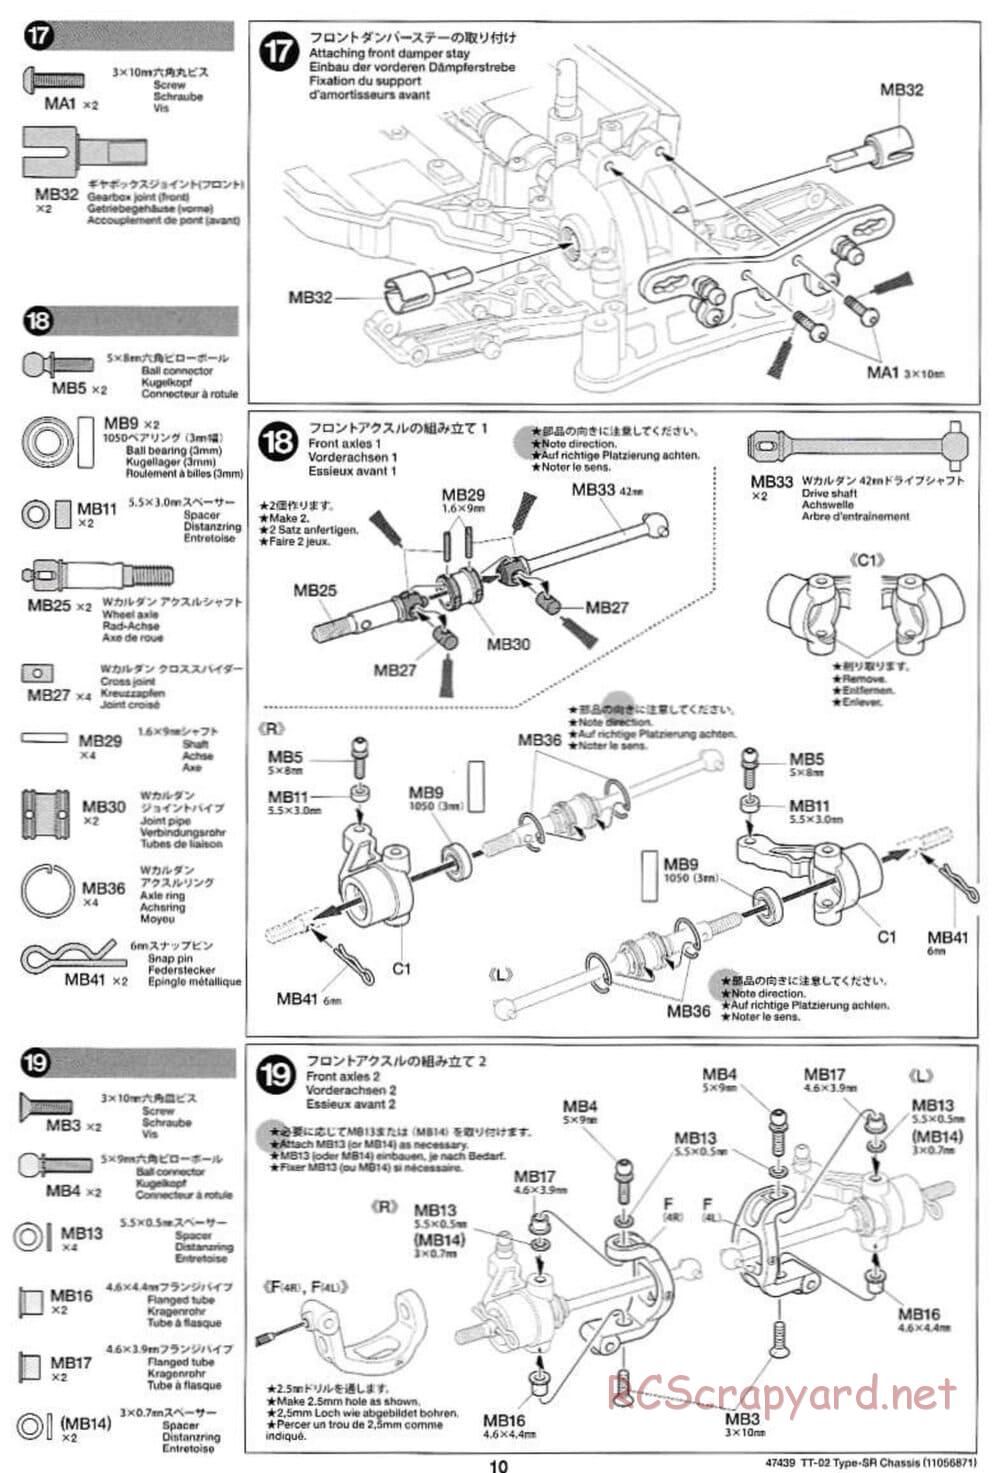 Tamiya - TT-02 Type-SR Chassis - Manual - Page 10